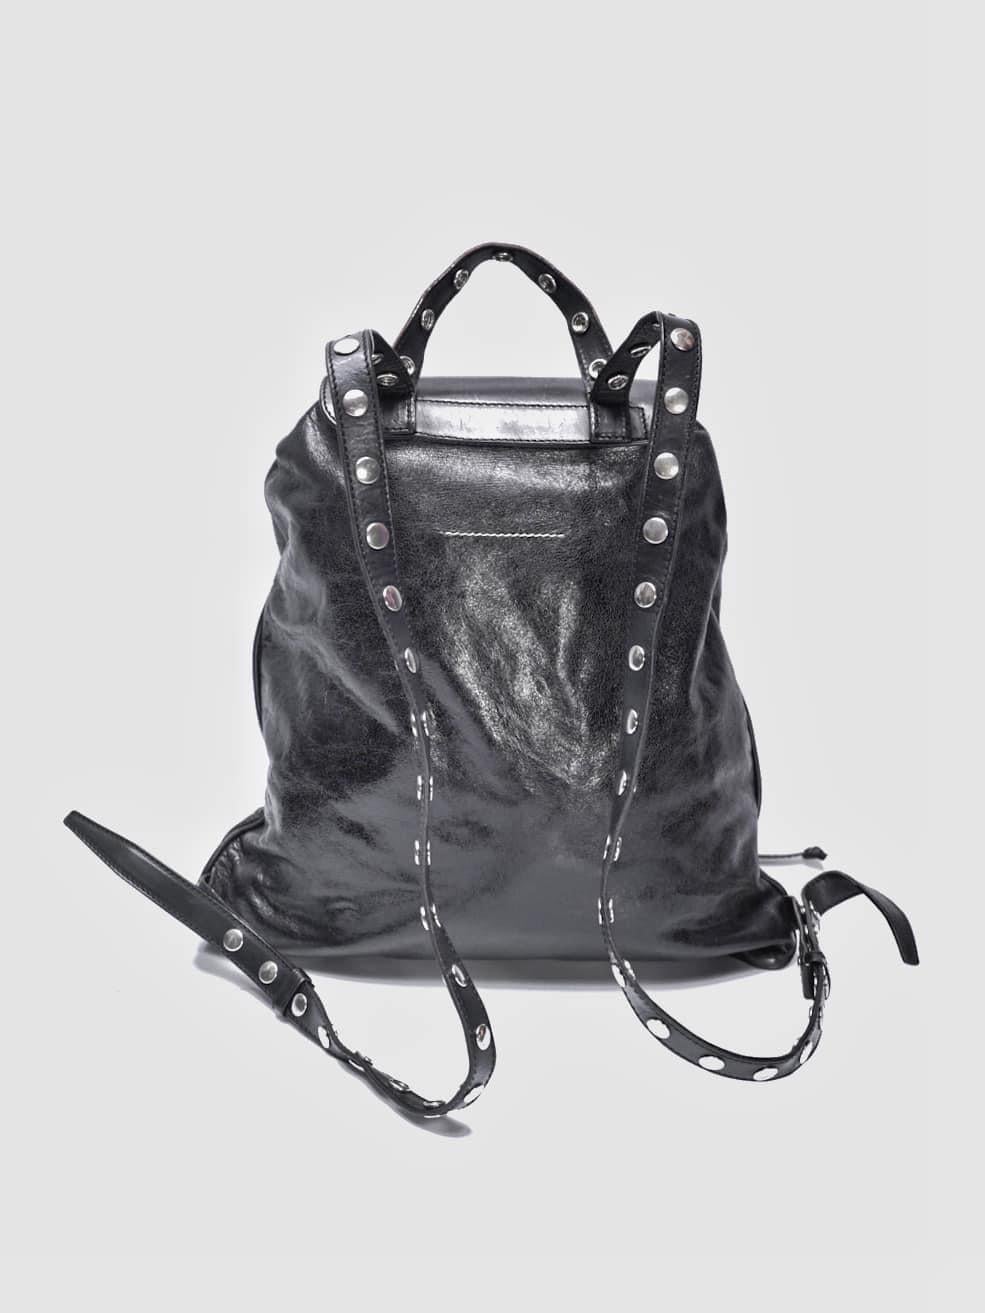 Maison Margiela Stud-Embellished Black Leather Backpack In Good Condition For Sale In Bangkok, TH